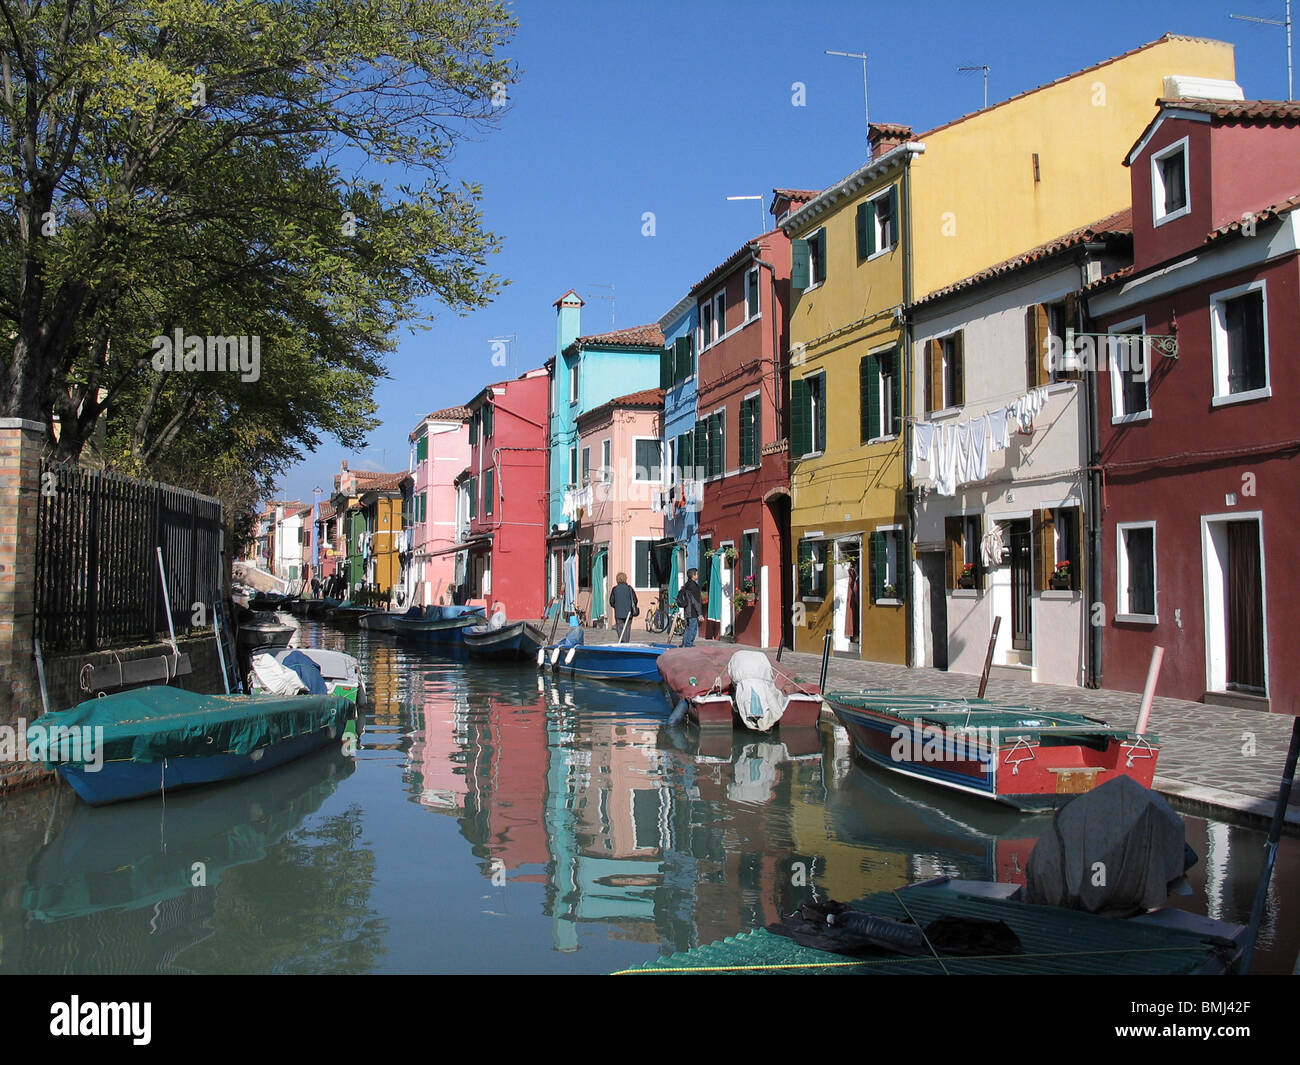 Burano, Venice : Colorful houses on Burano, an island in the Venetian Lagoon near Venice Stock Photo